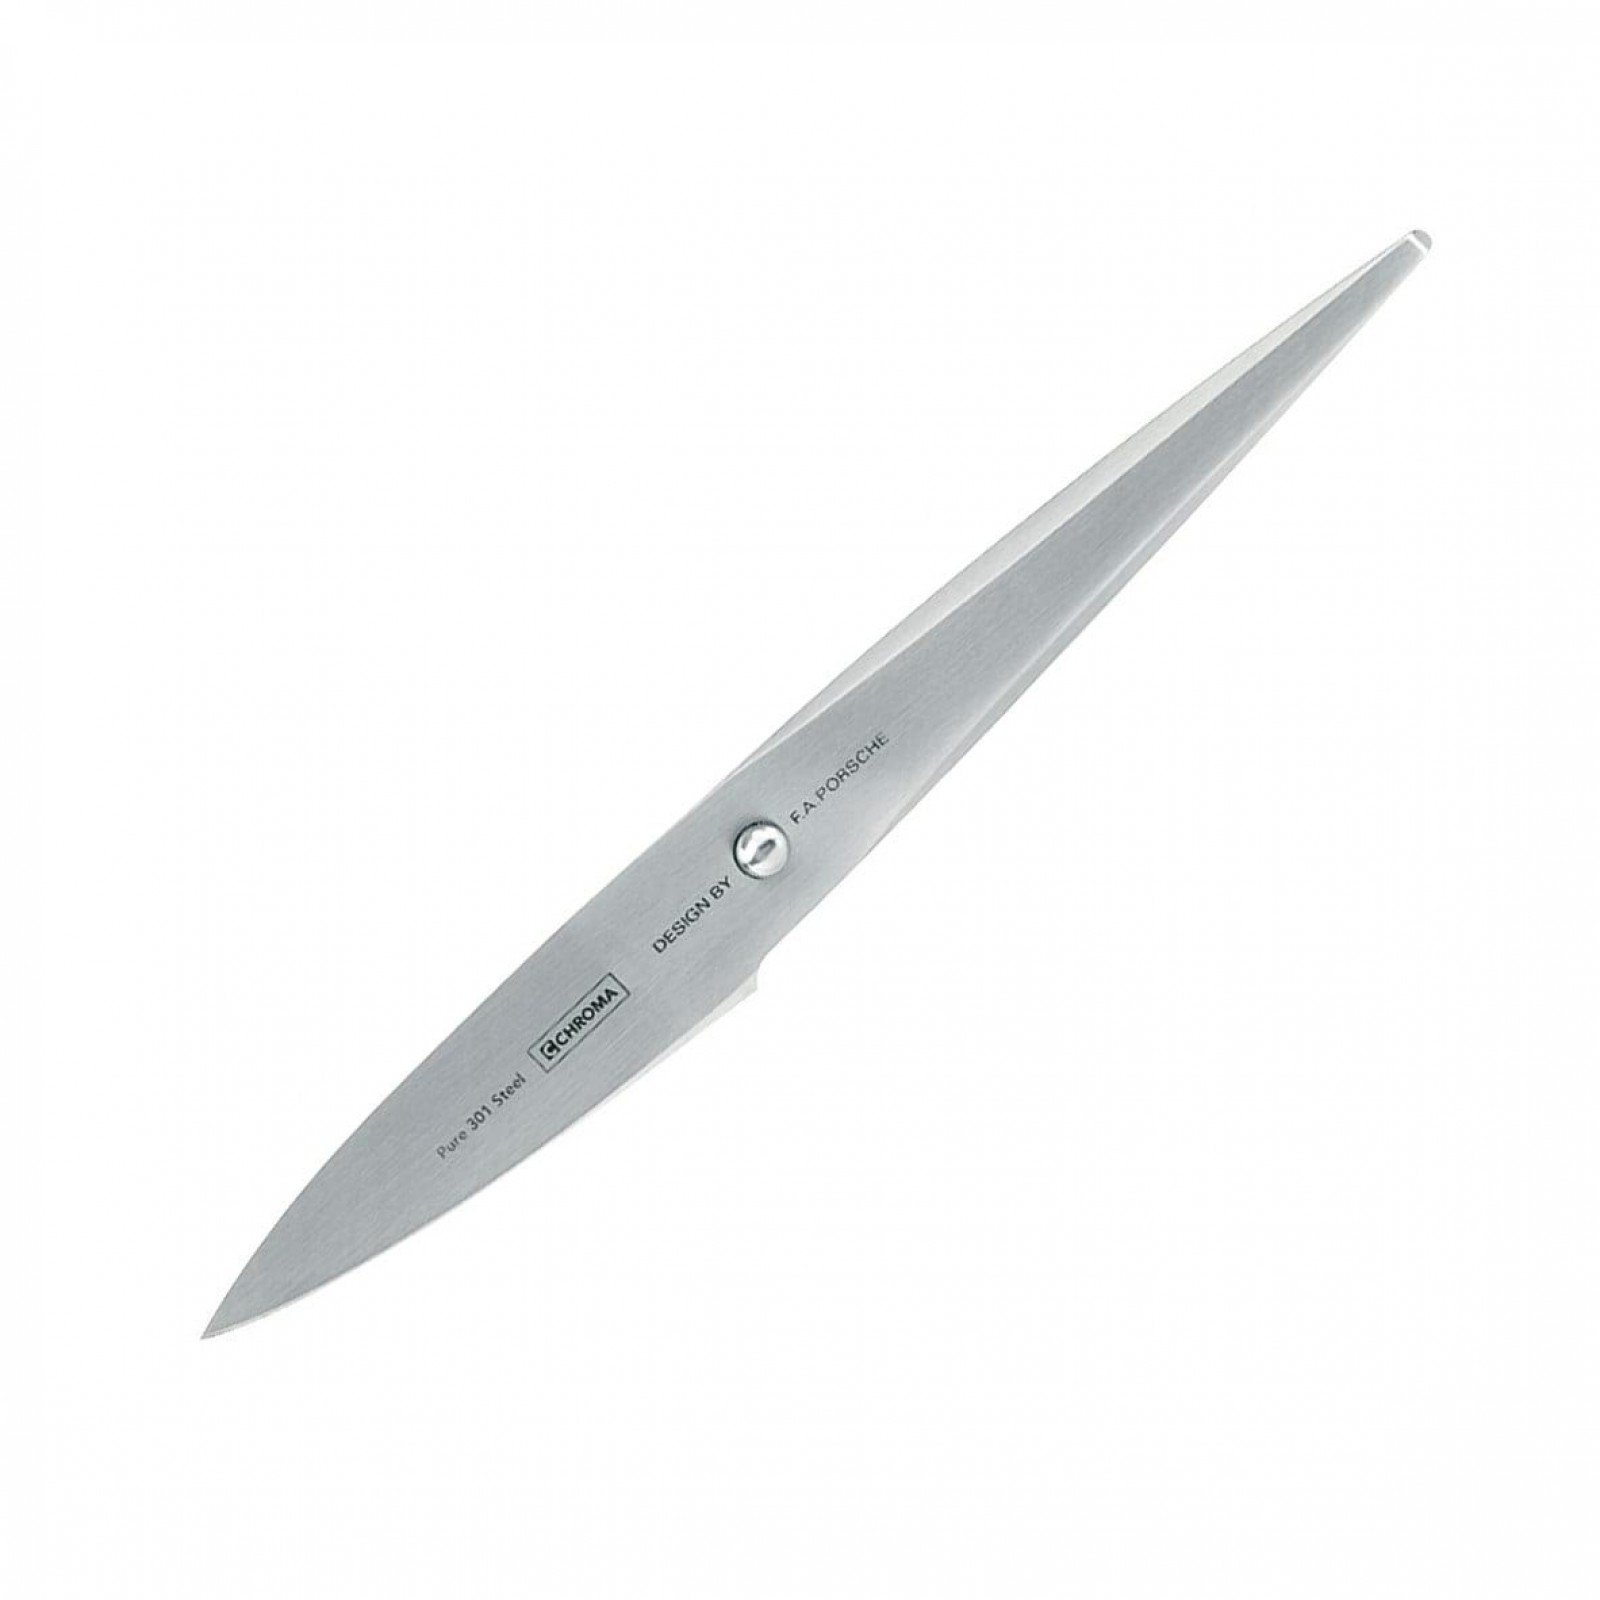 Paring Knife 7.7 cm Type 301 P09 by F.A. Porsche - Chroma 